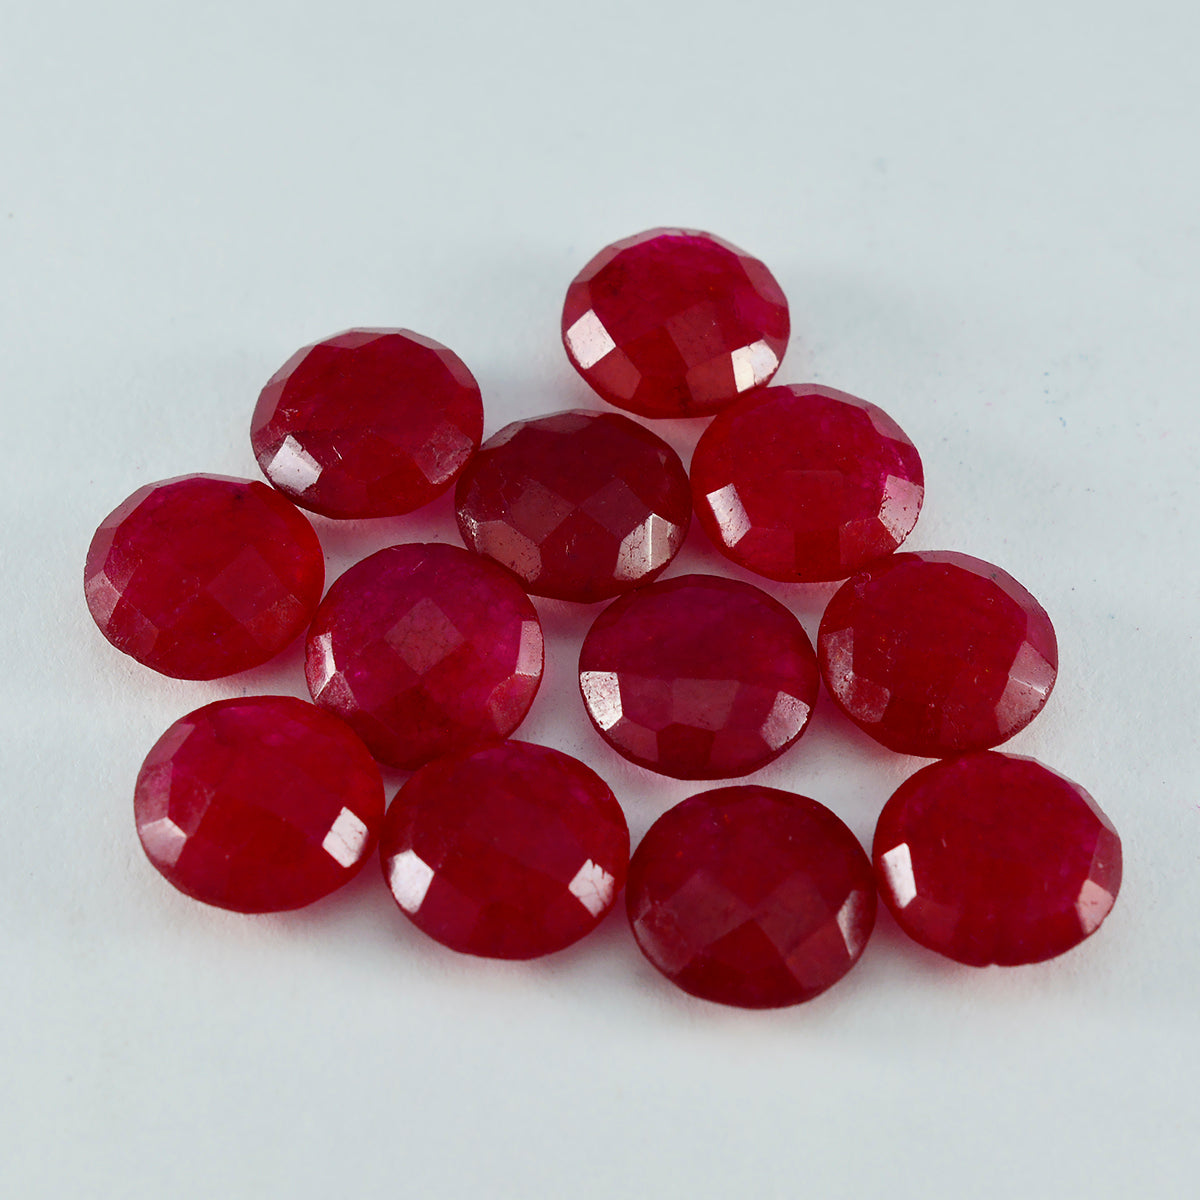 Riyogems 1 pieza jaspe rojo natural facetado 13x13 mm forma redonda gemas de calidad A+